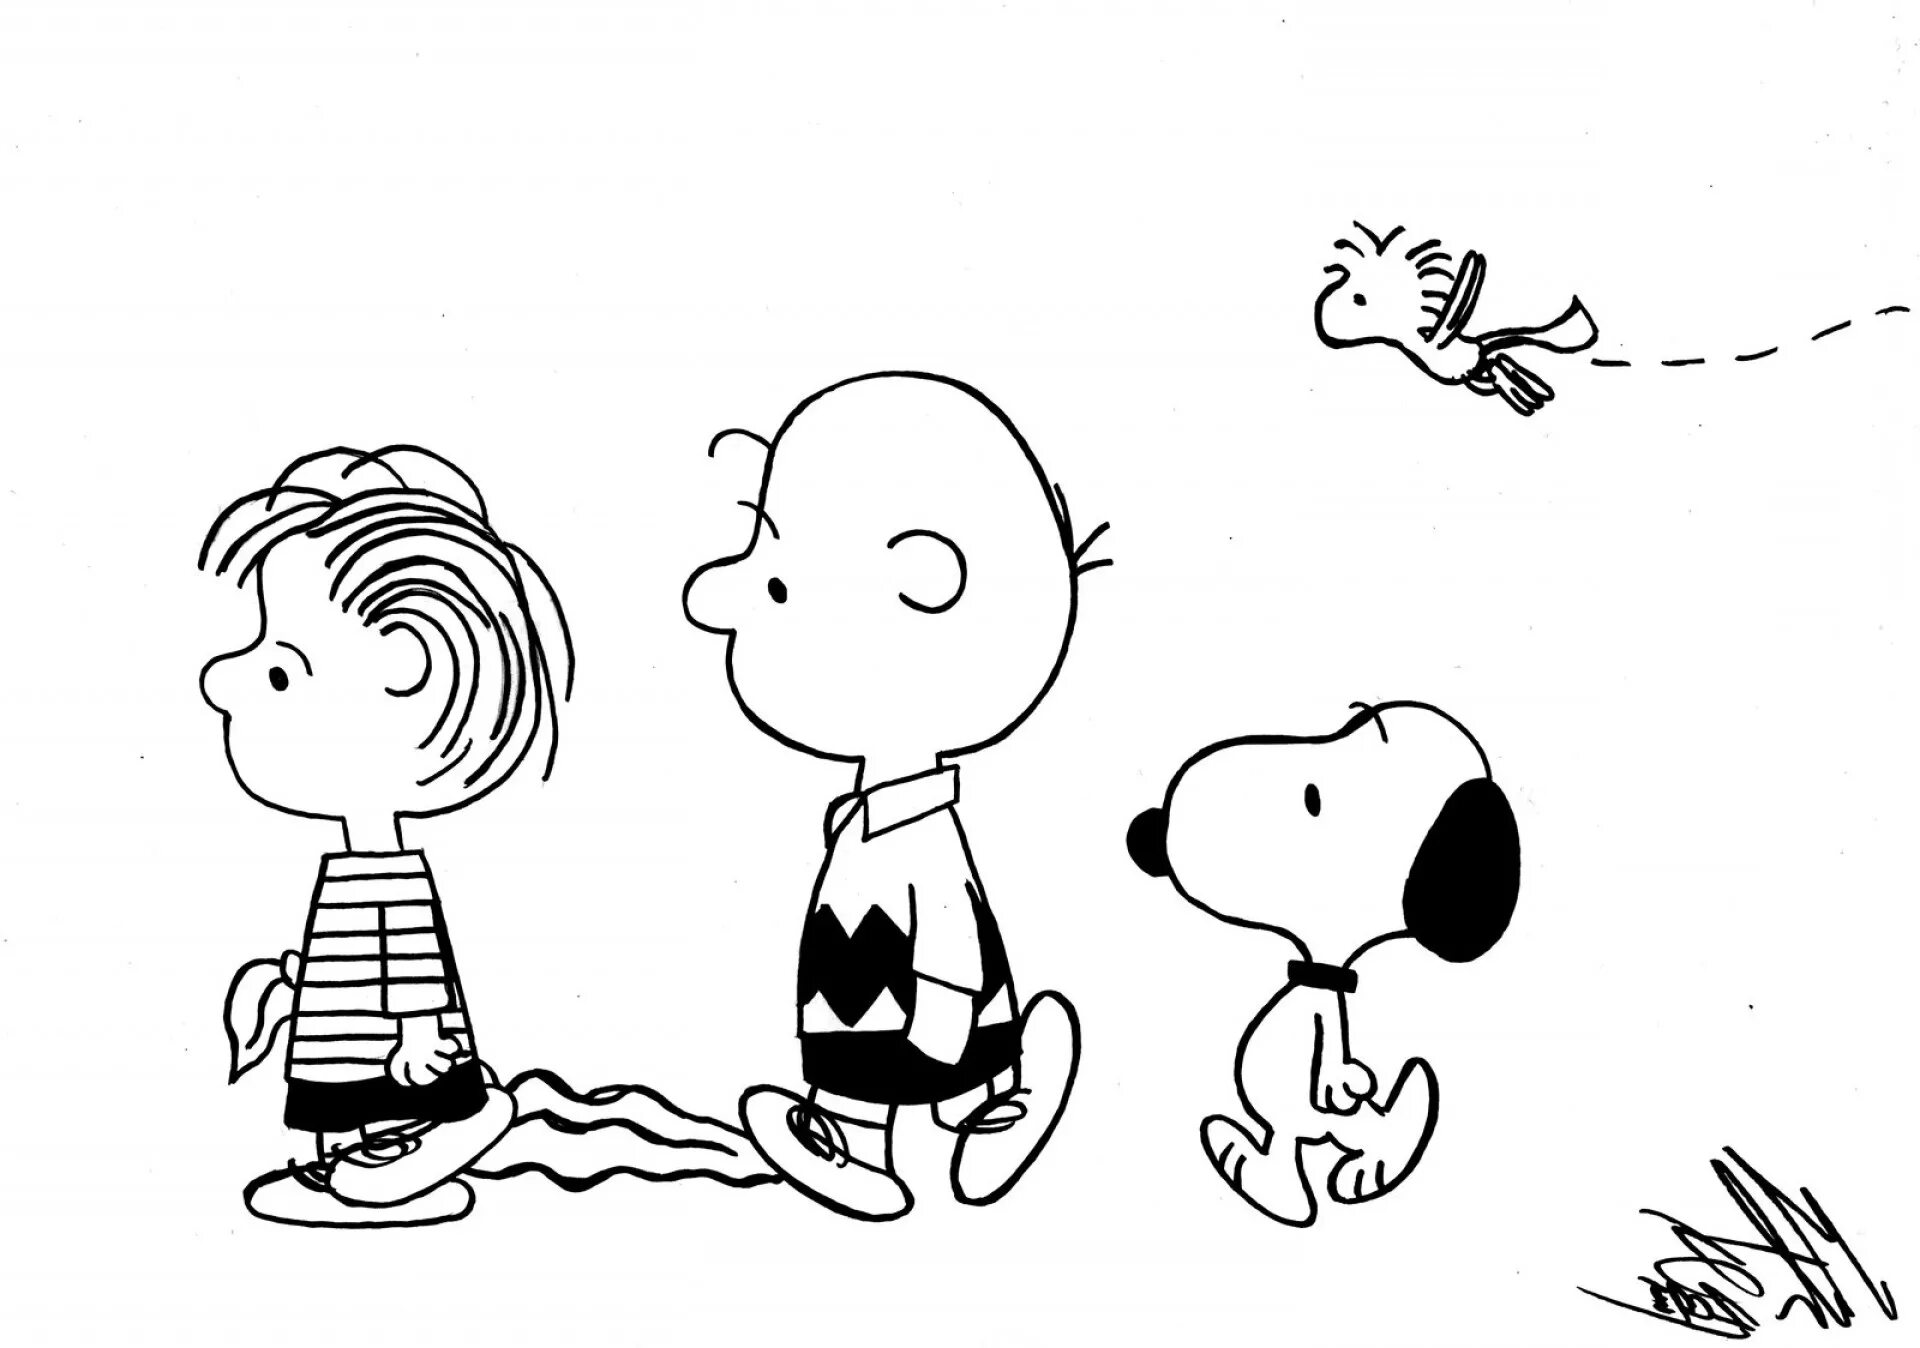 Charlie brown. Снупи и Чарли Браун. Чарли Браун и его друзья. Чарли Браун и мелочь пузатая. Peanuts Снупи.